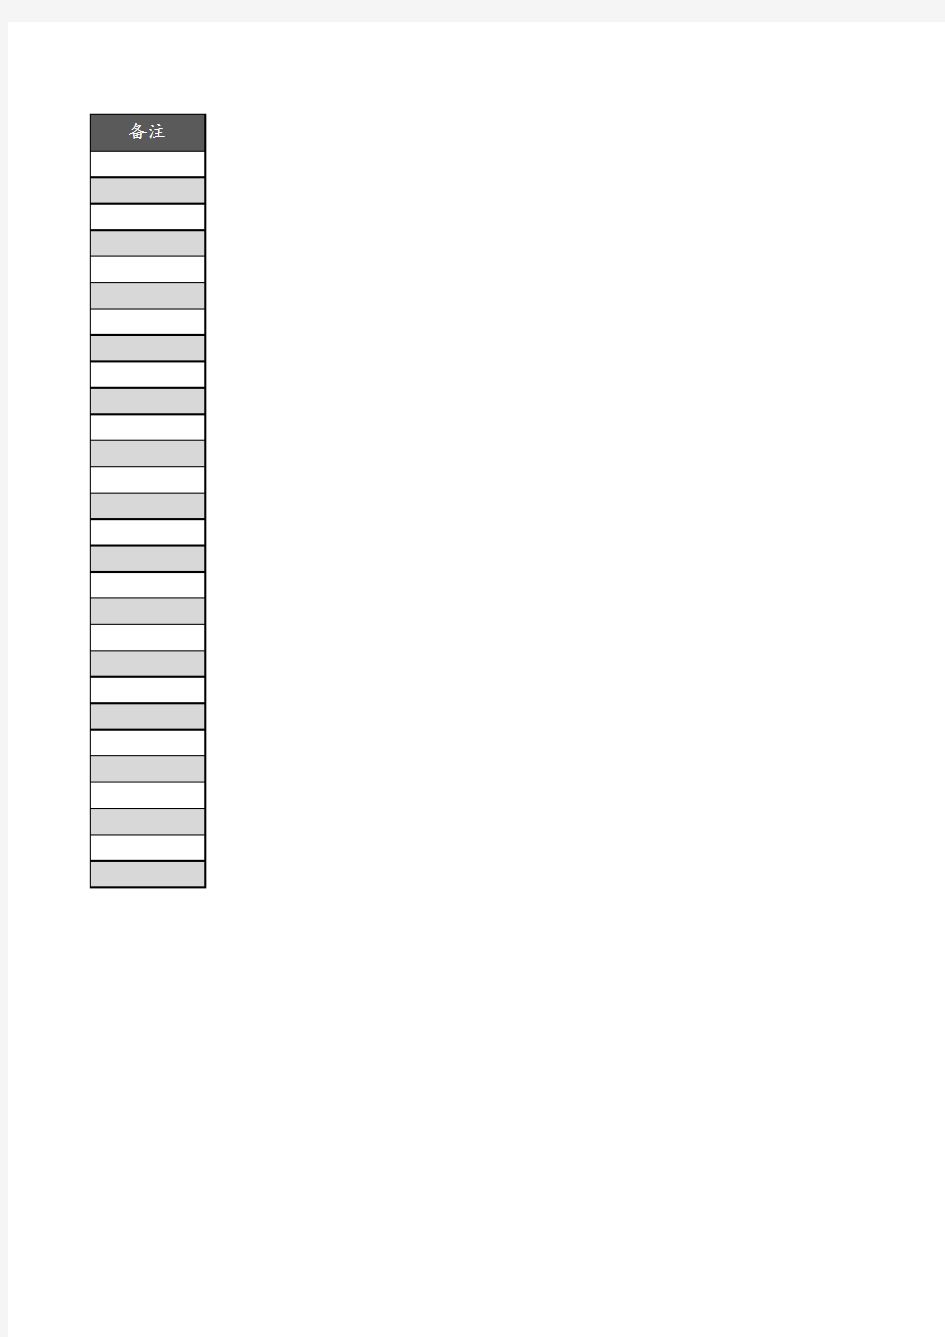 【Excel表格模板】公司年度招聘计划表